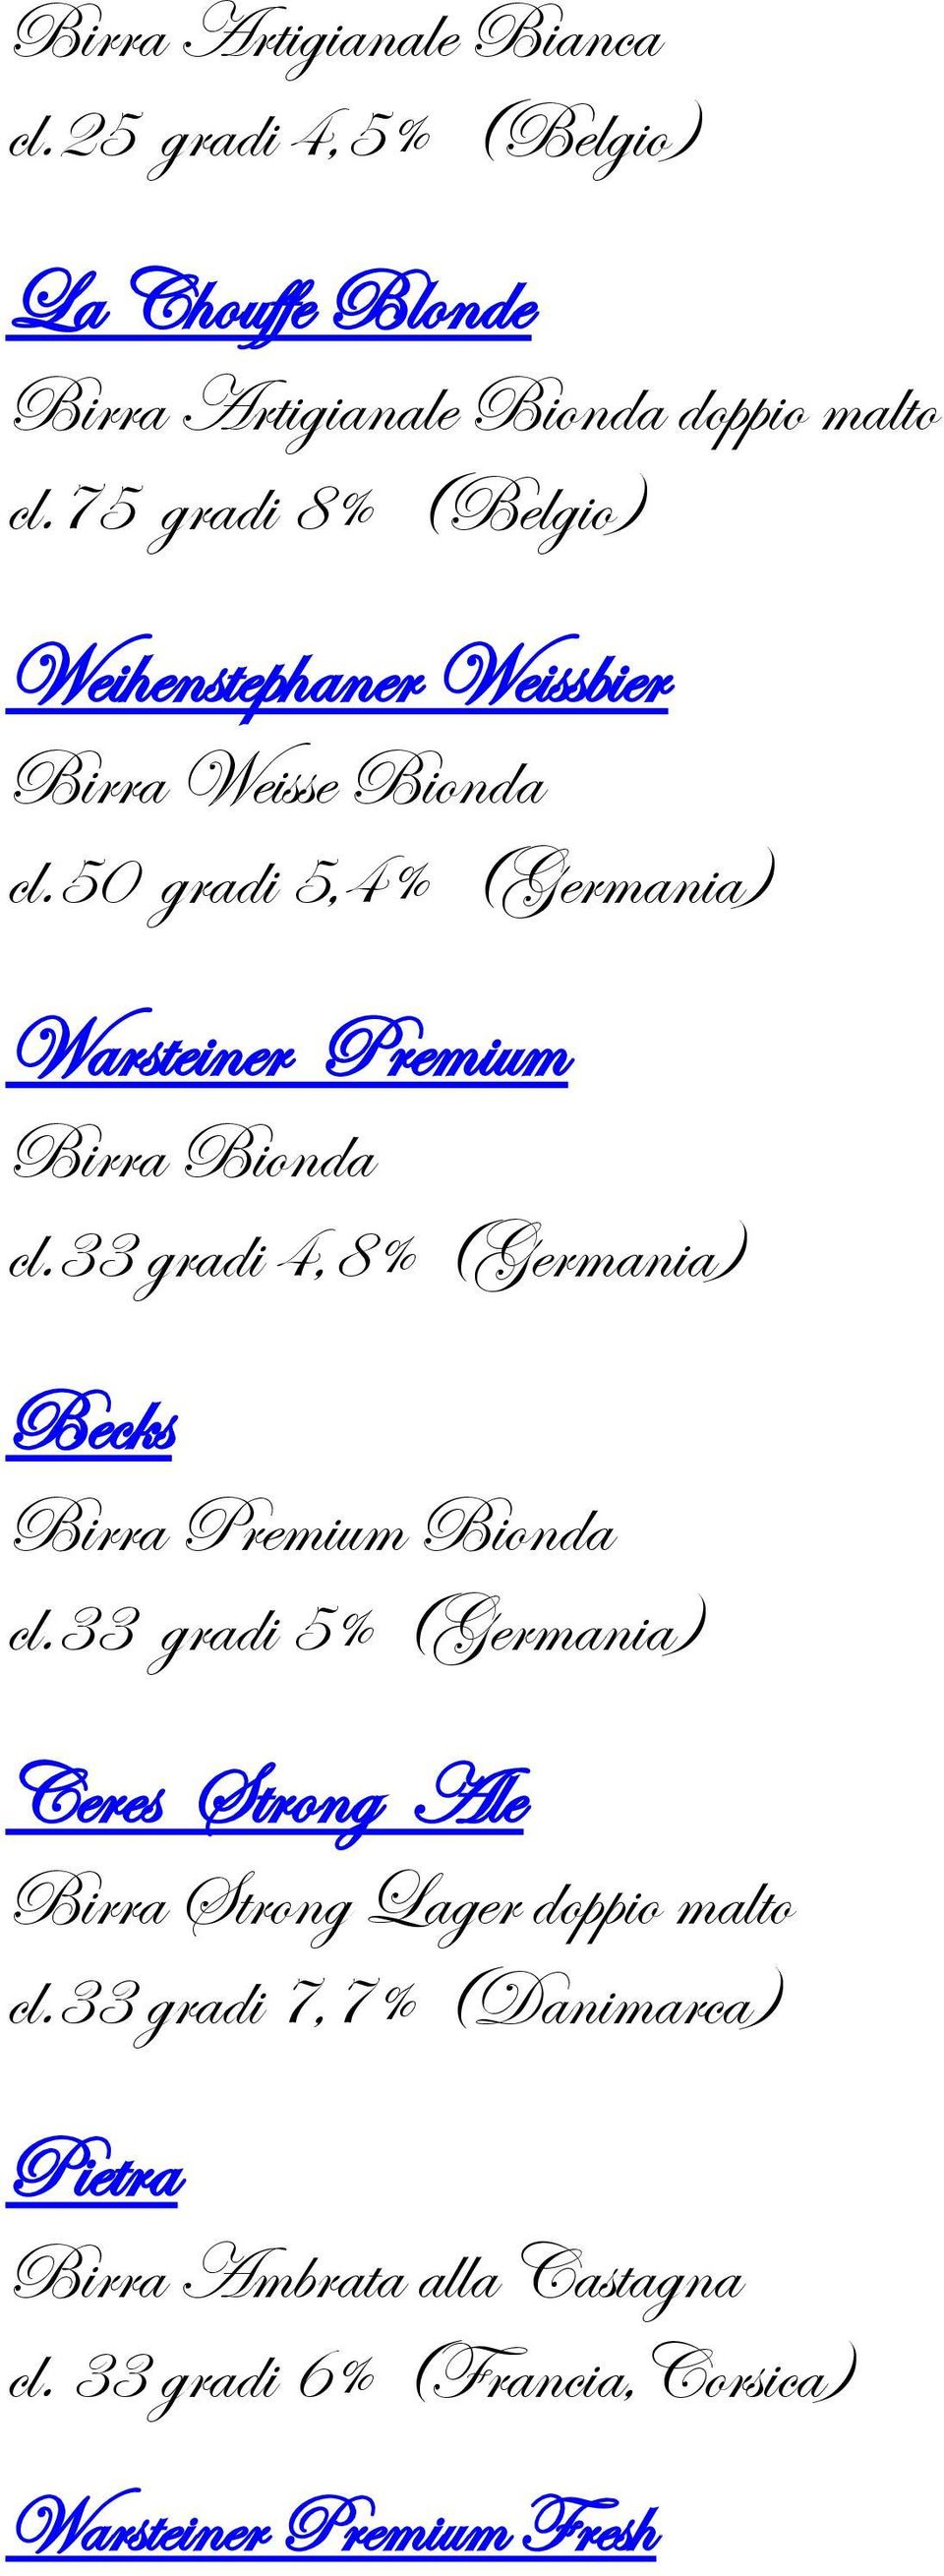 50 gradi 5,4% (Germania) Warsteiner Premium Birra Bionda cl.33 gradi 4,8% (Germania) Becks Birra Premium Bionda cl.